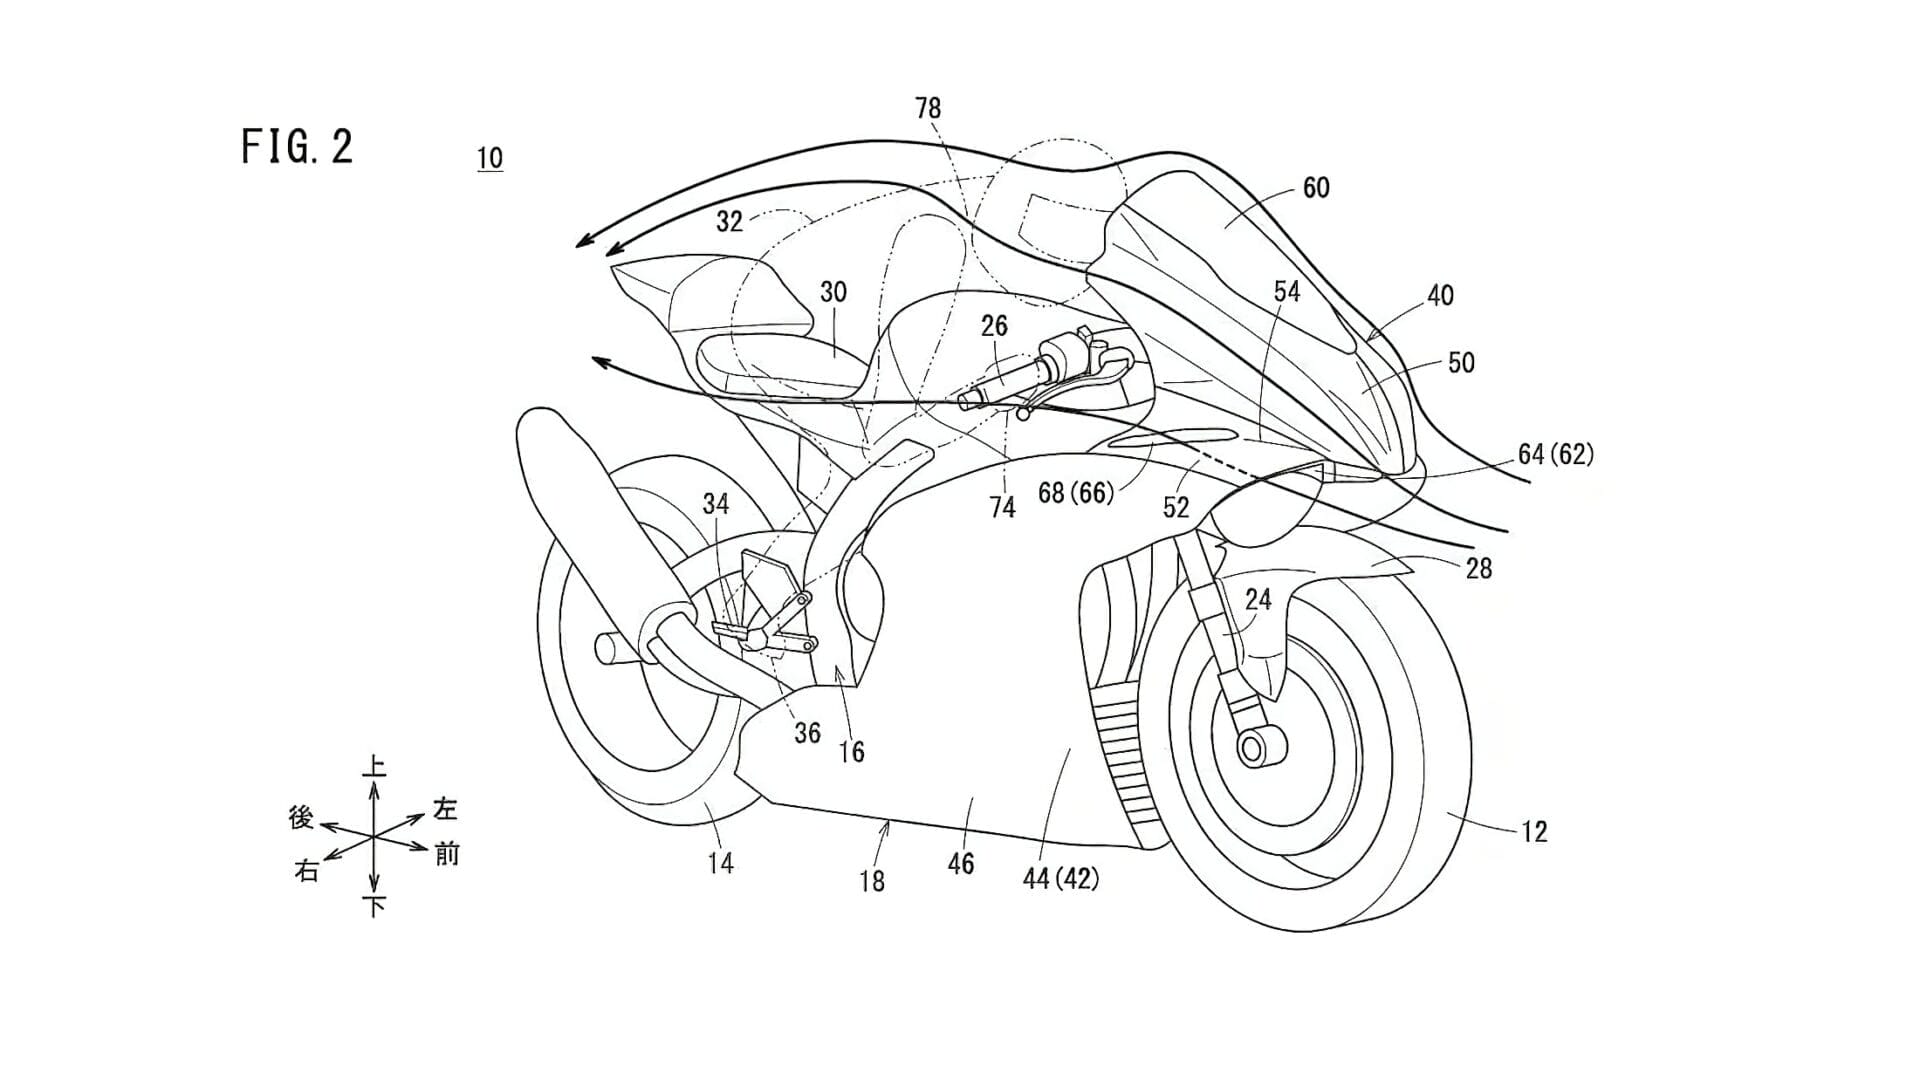 Honda’s patent approach: New Fireblade fairing combines aerodynamics and design